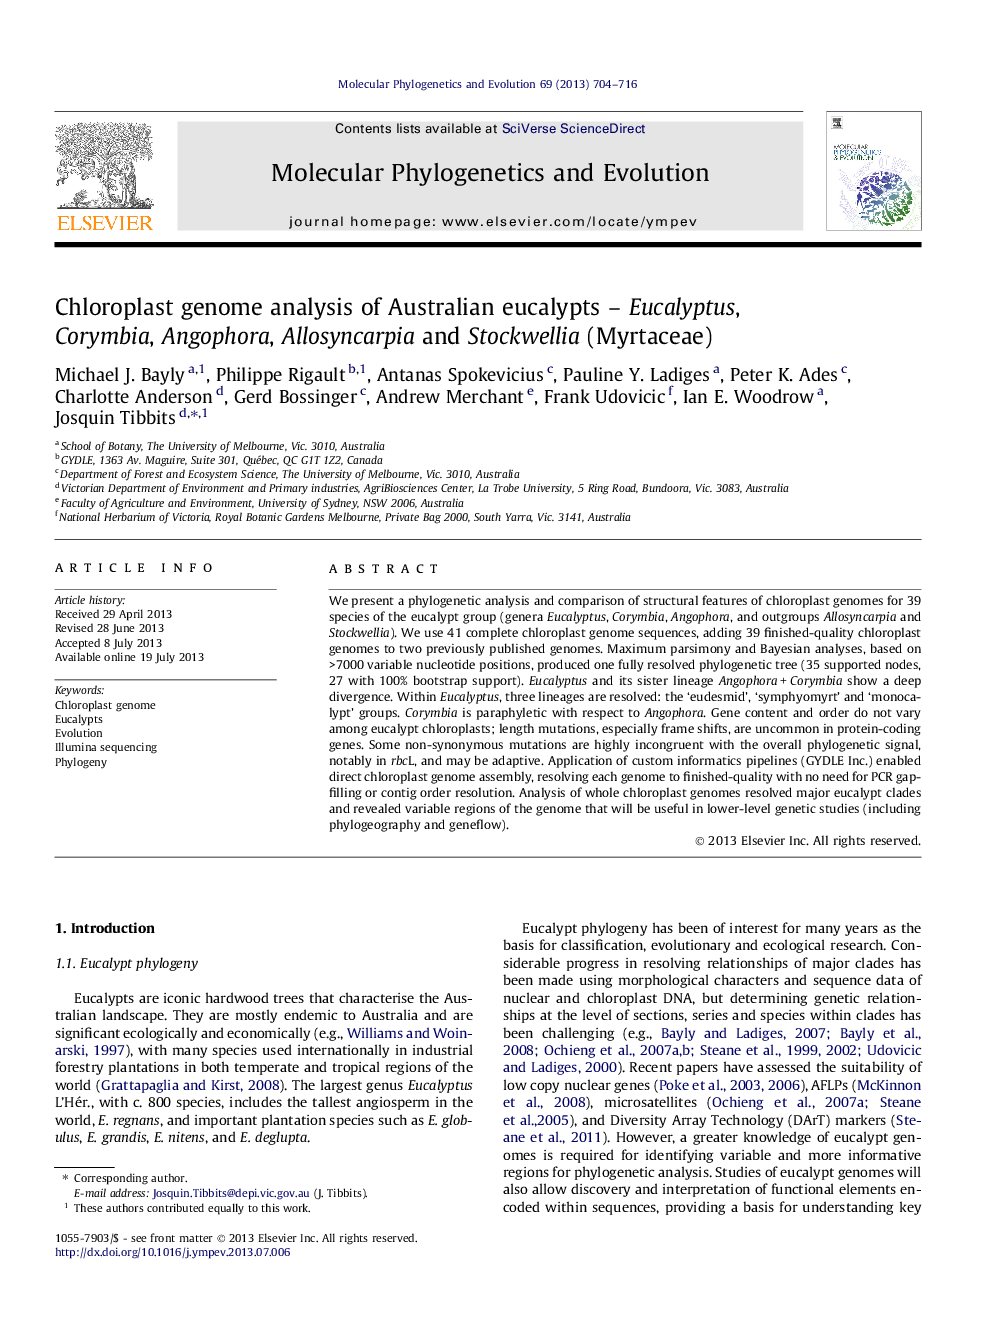 تجزیه و تحلیل ژنوم کلروپلاست از اکالیپتس استرالیایی - اکالیپتوس، کورمبیا، آنگووره، آلو سینکارپیا و استکولیا (میترائه) 